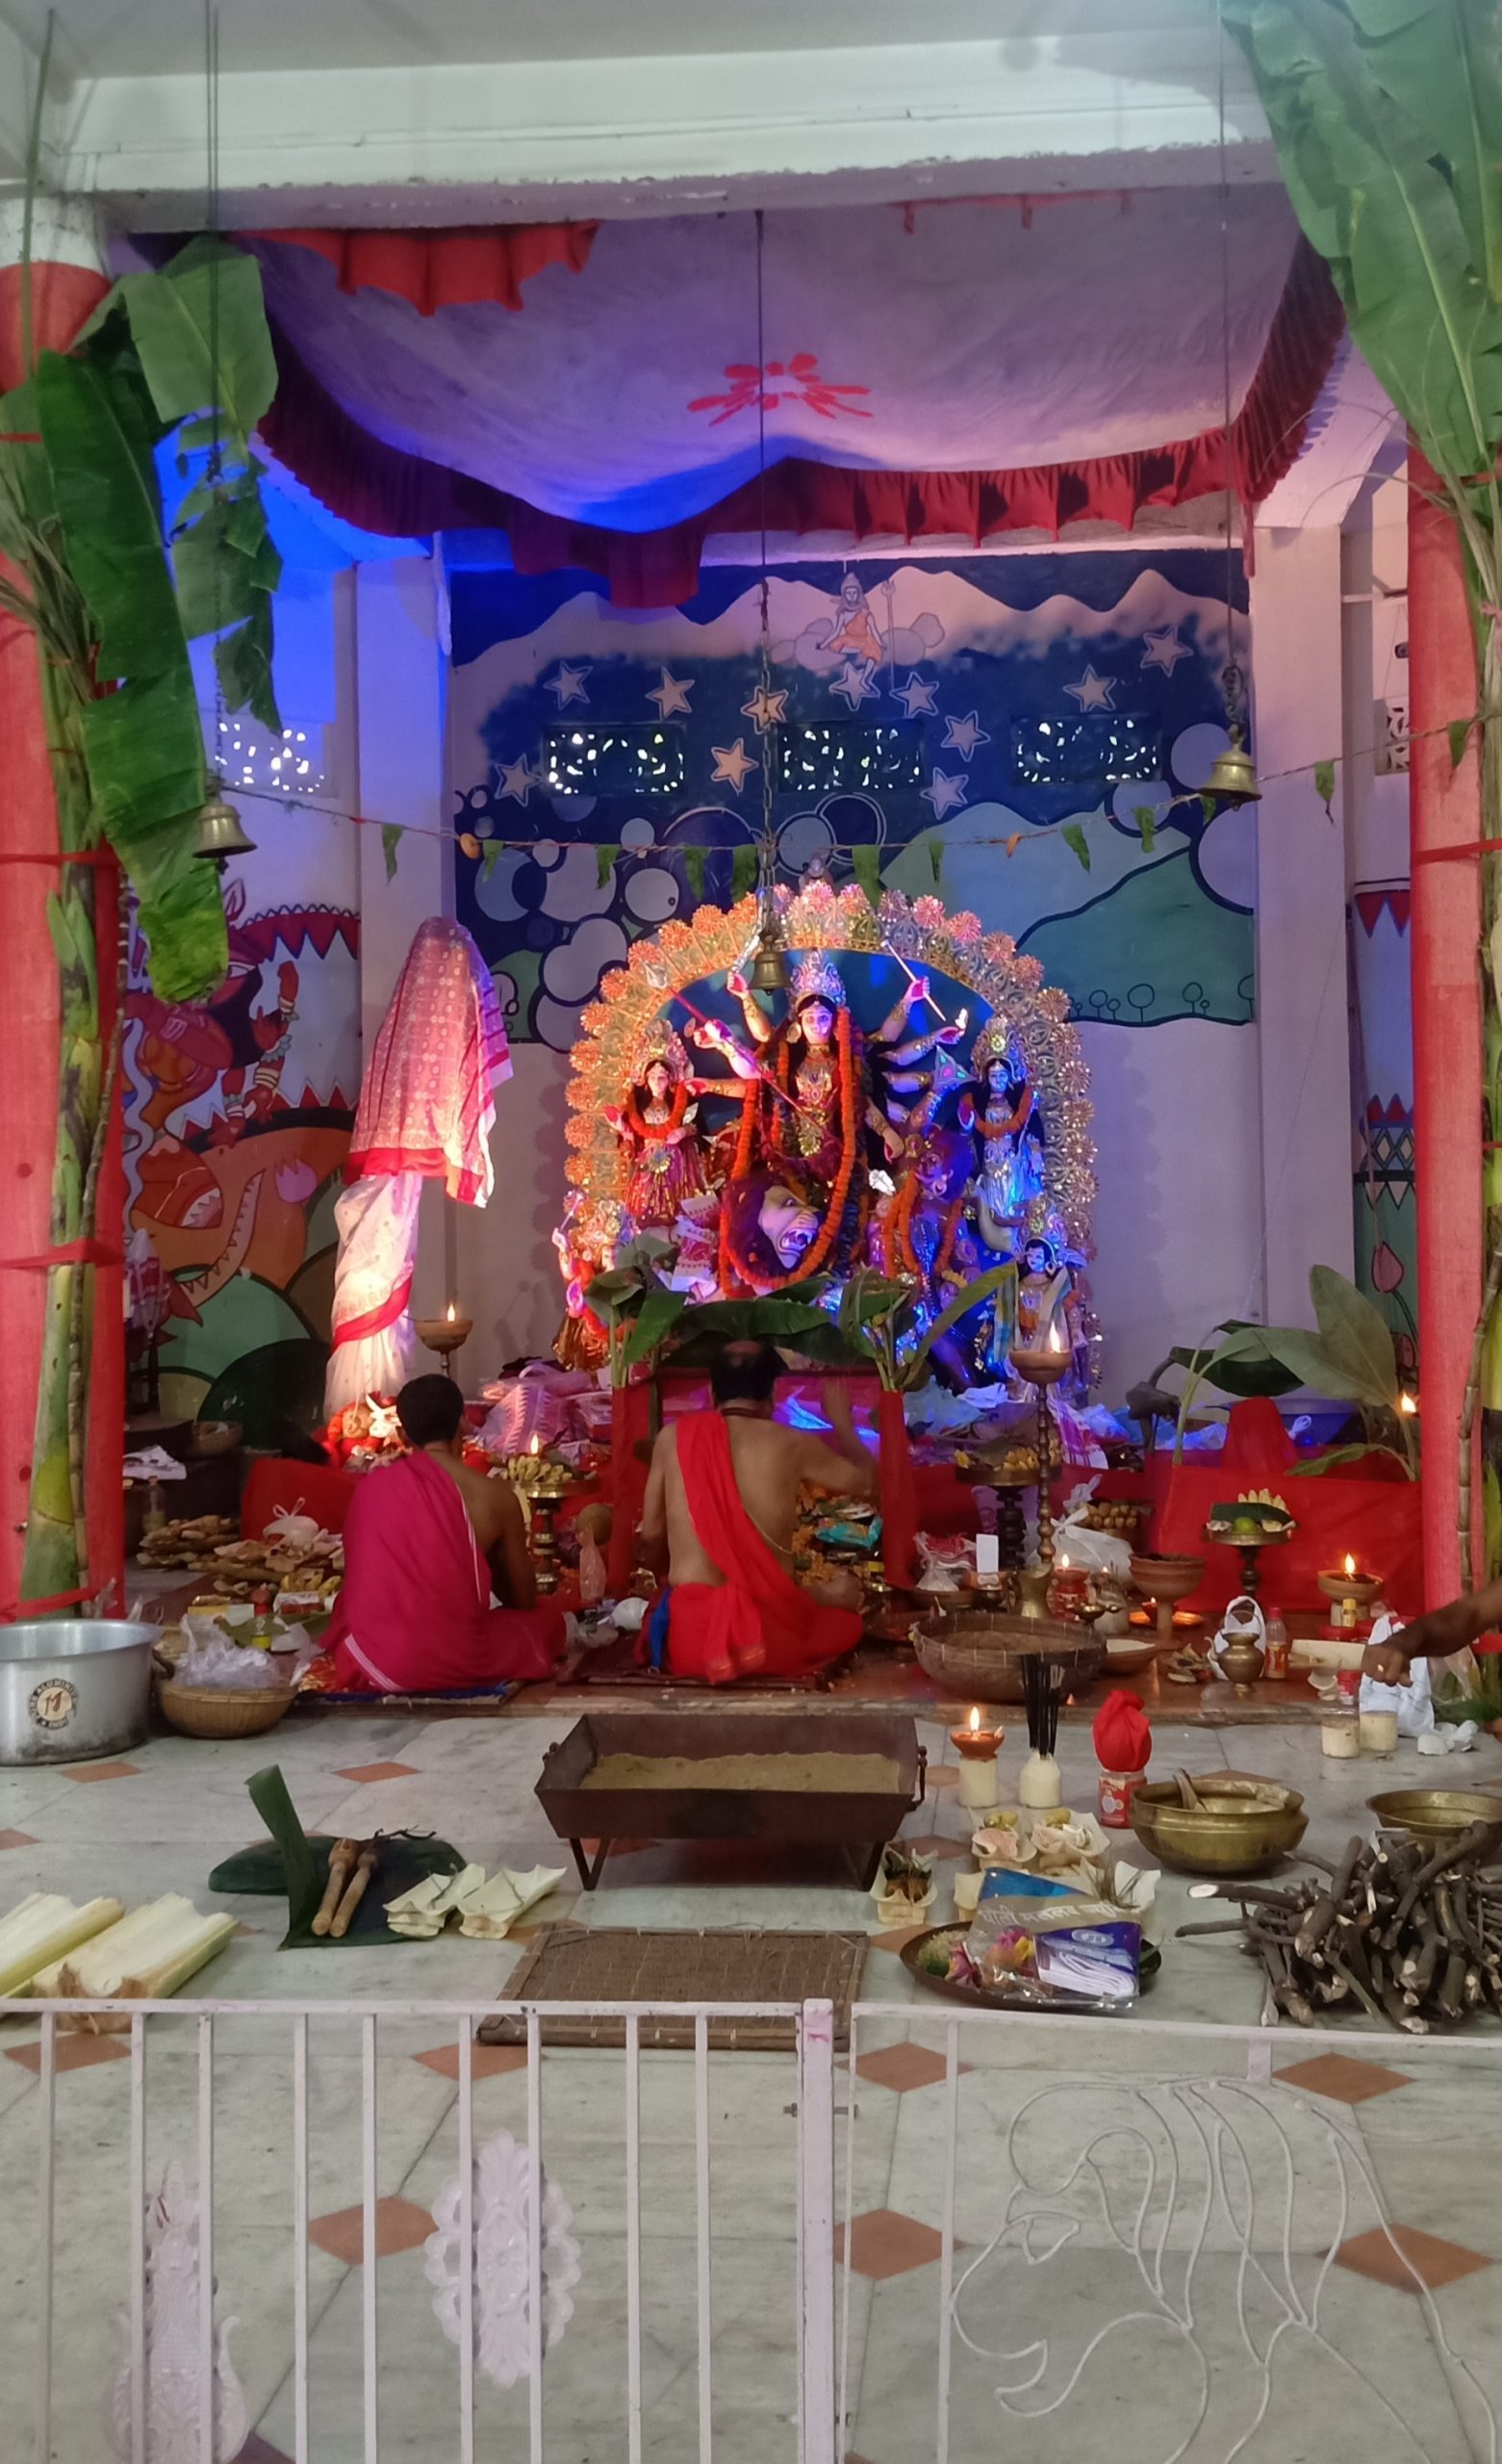 Goddess Durga temple